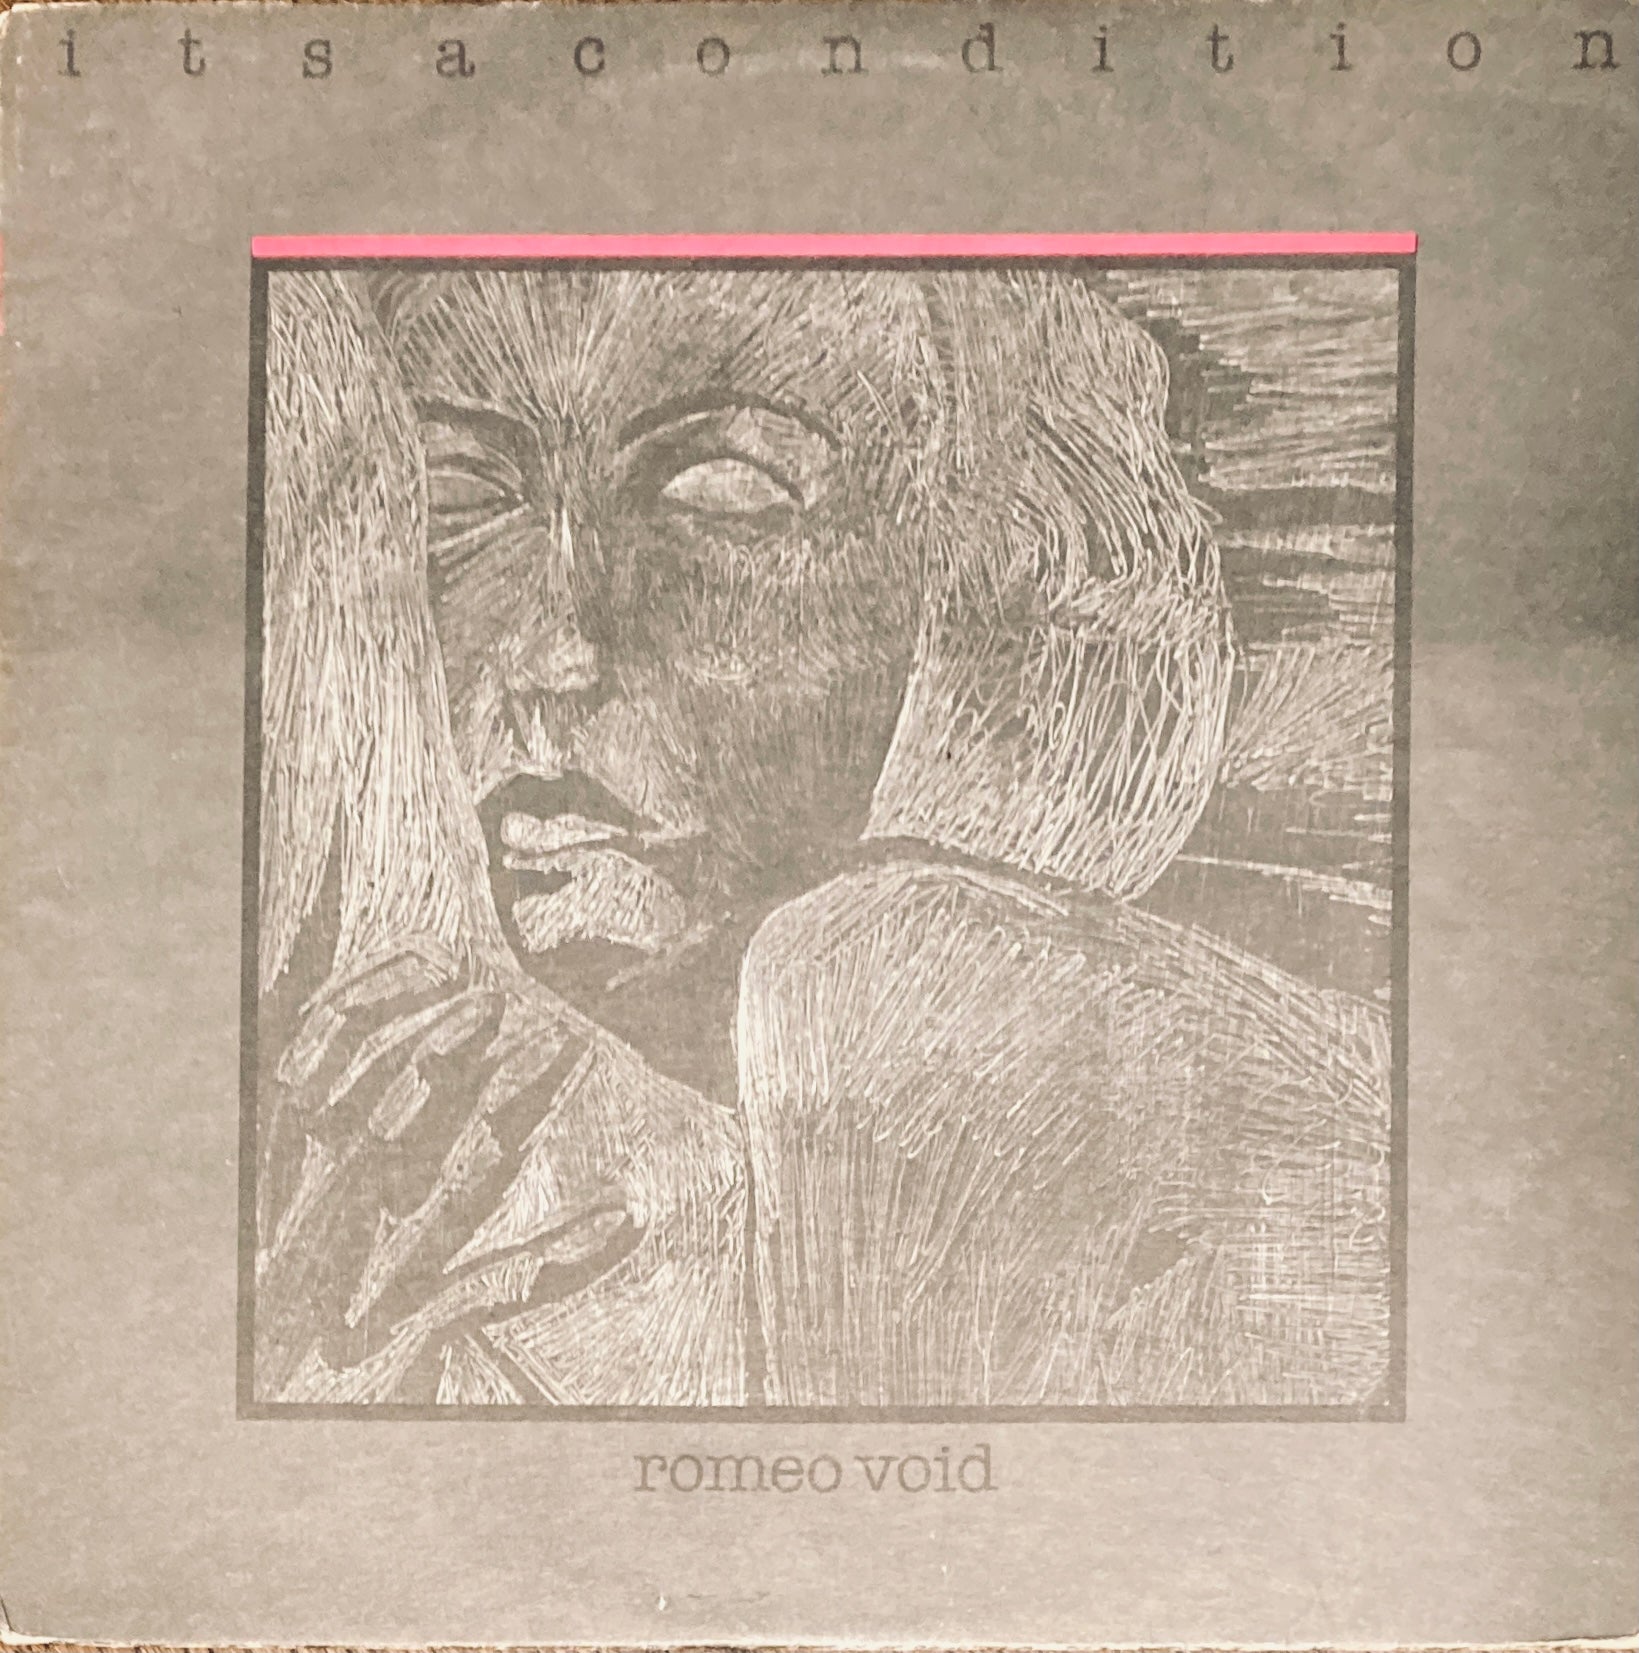 Romeo Void "It's A Condition" LP (1981)